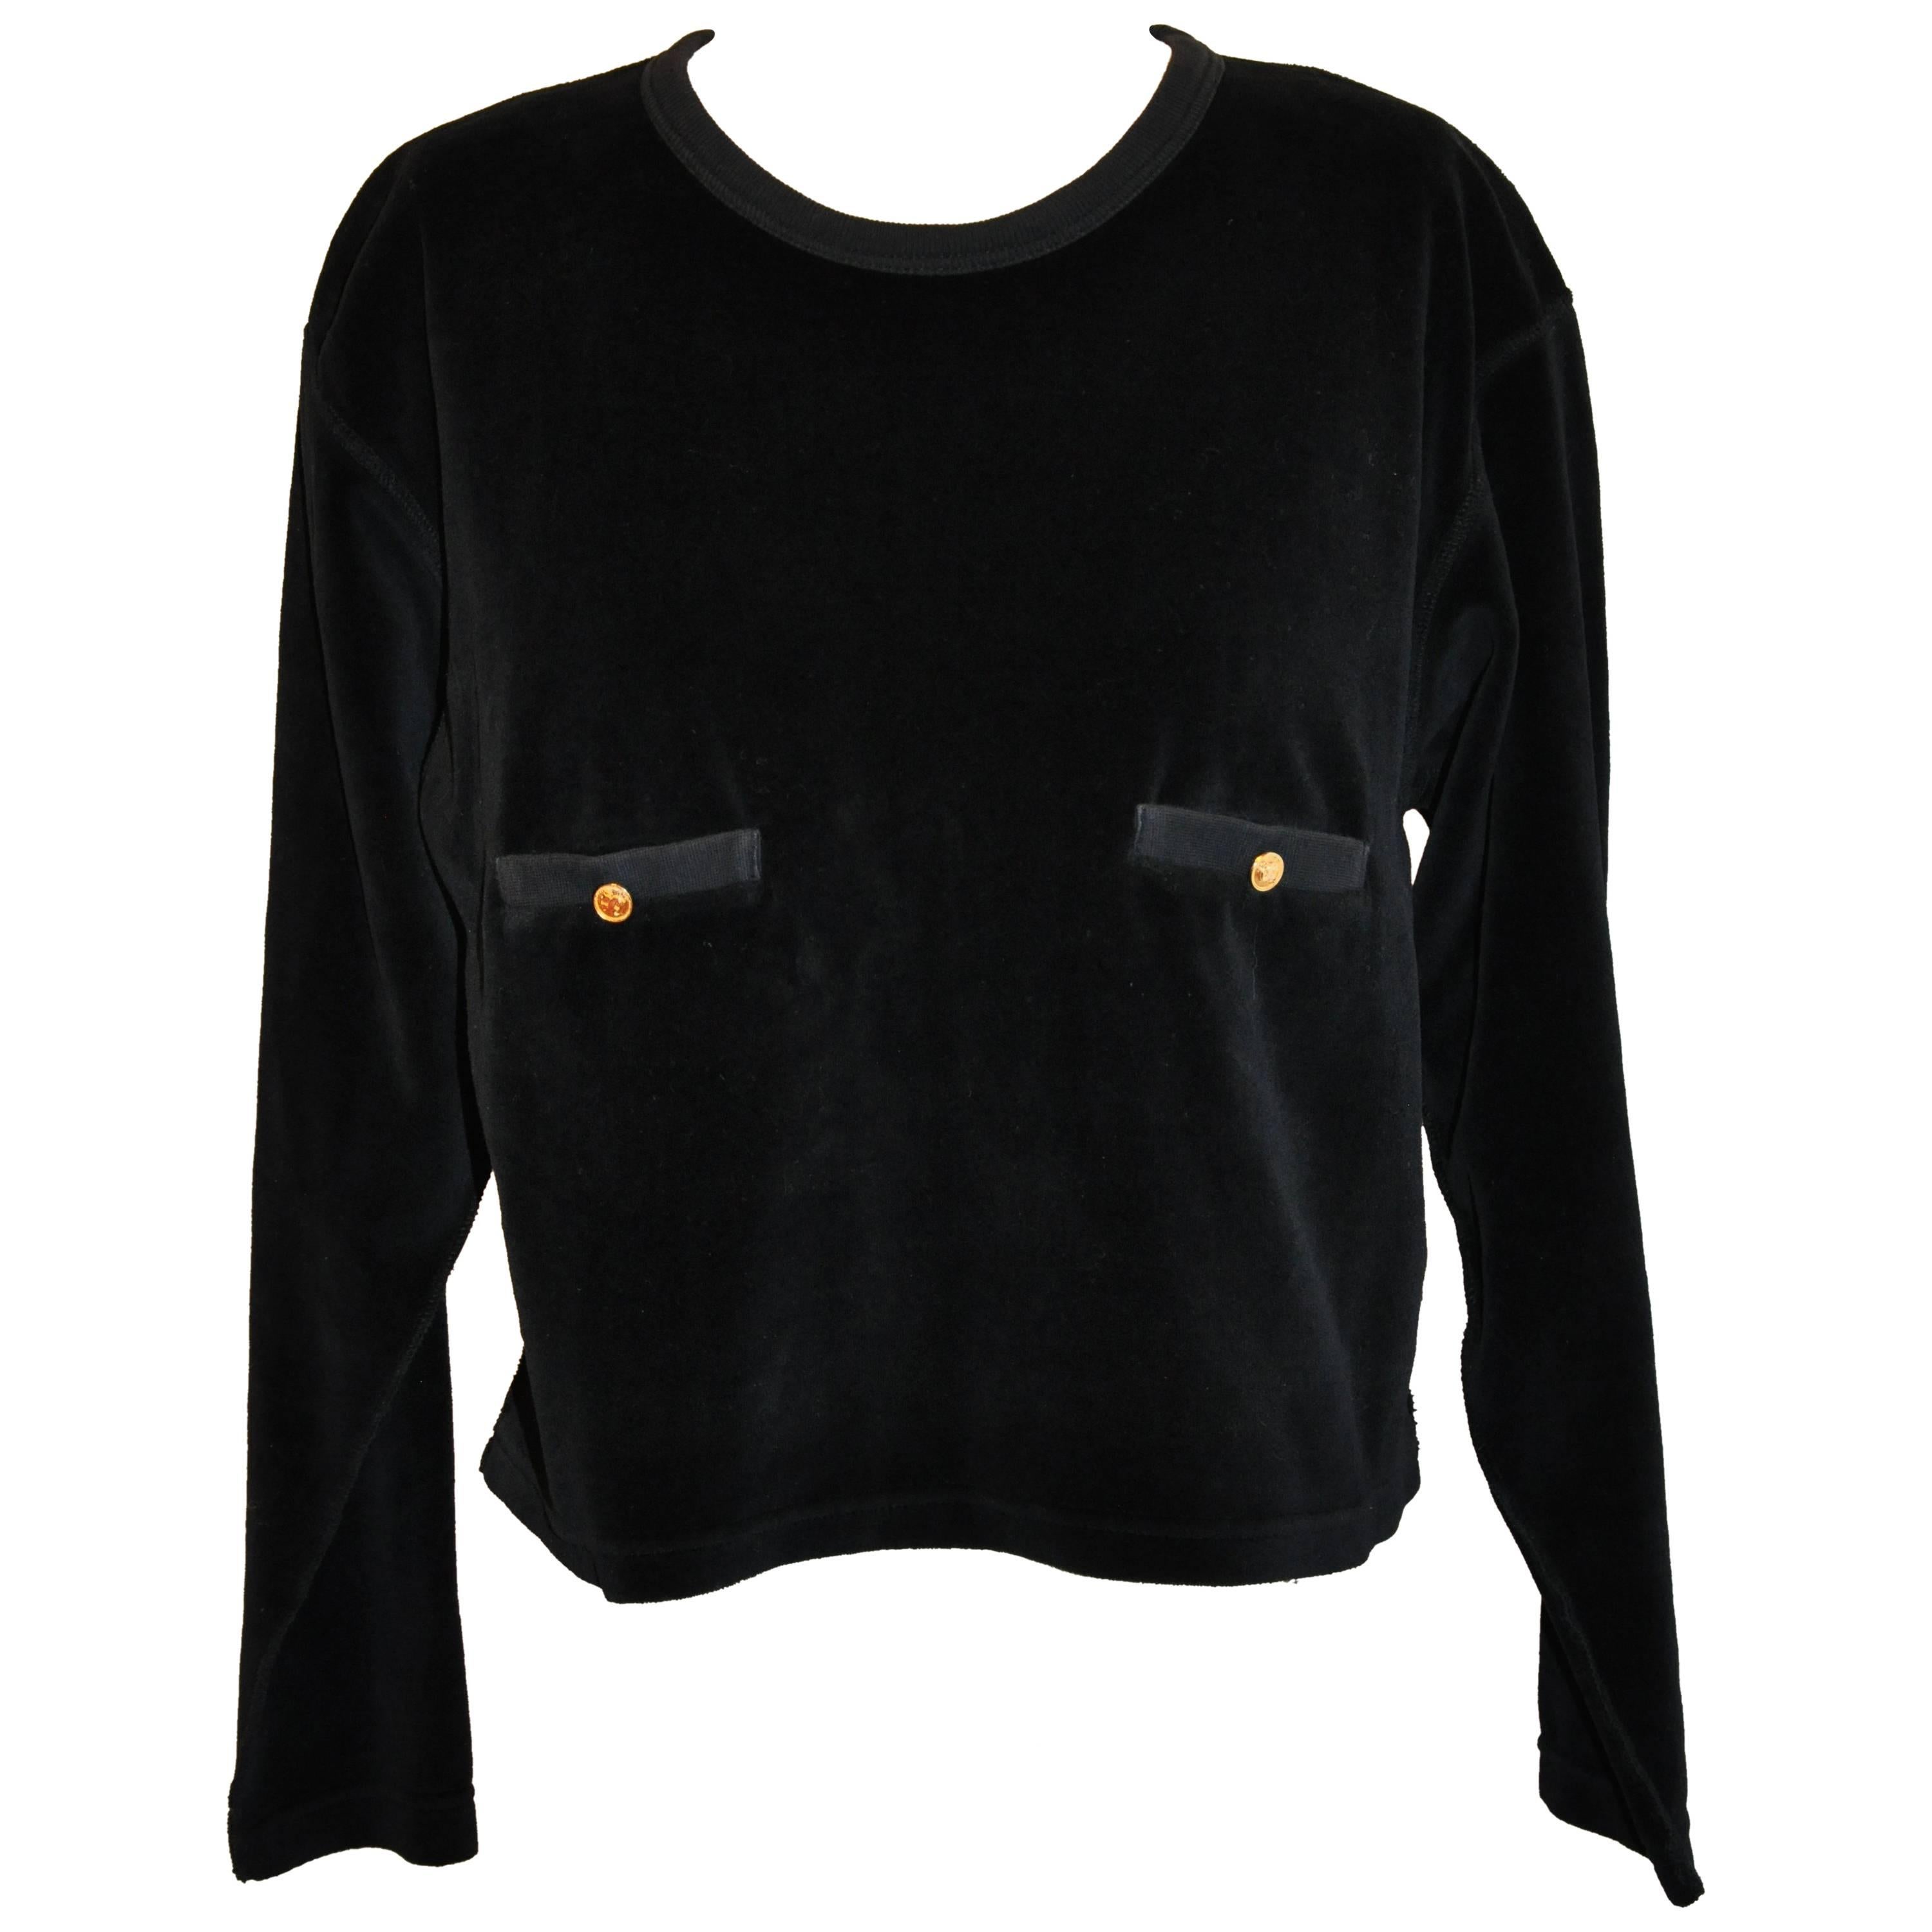 Vintage Sonia Rykiel Sweater Top Size Small to Medium 80s Designer Mock Neck Long Sleeve Velour Rugby Stripe Sweatshirt